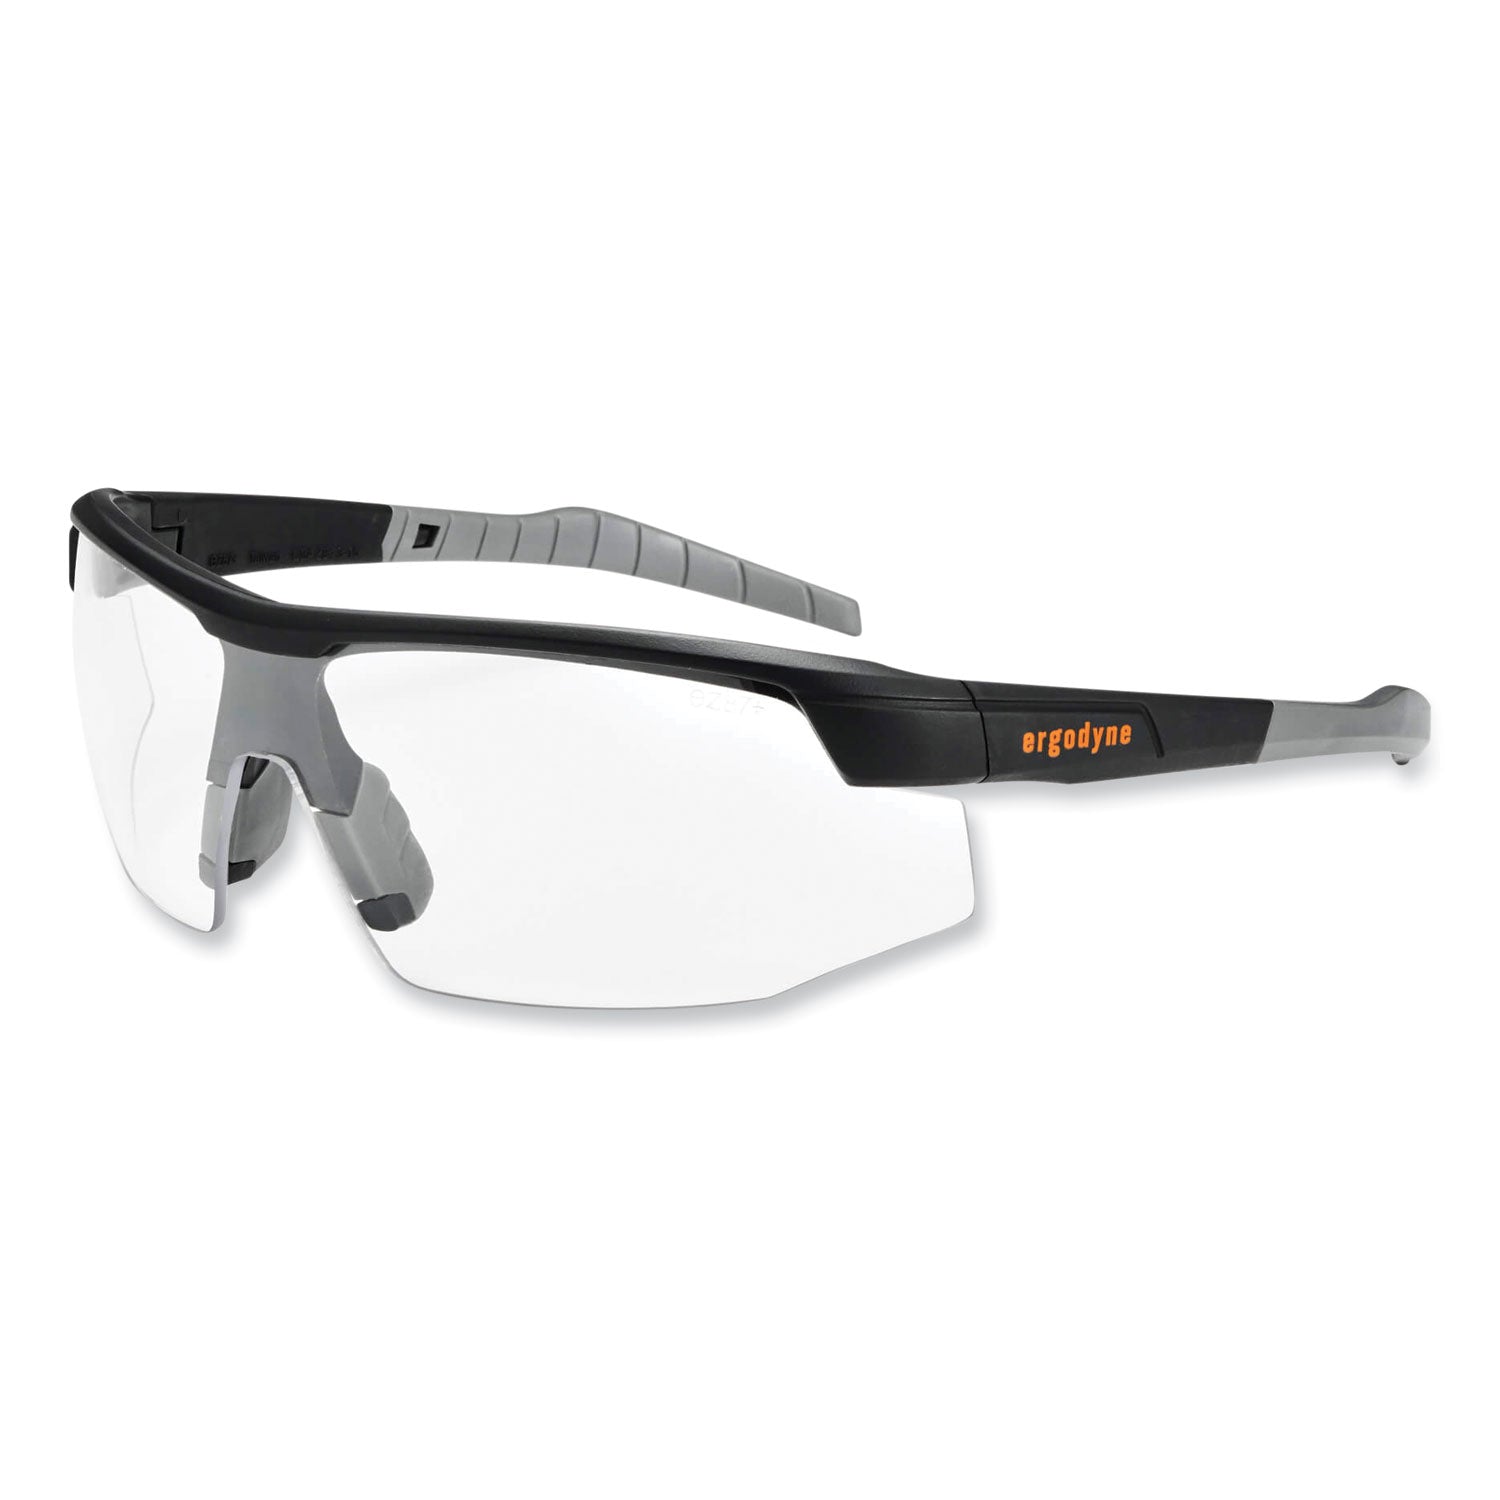 skullerz-skoll-safety-glasses-matte-black-nylon-impact-frame-clear-polycarbonate-lens-ships-in-1-3-business-days_ego59000 - 1